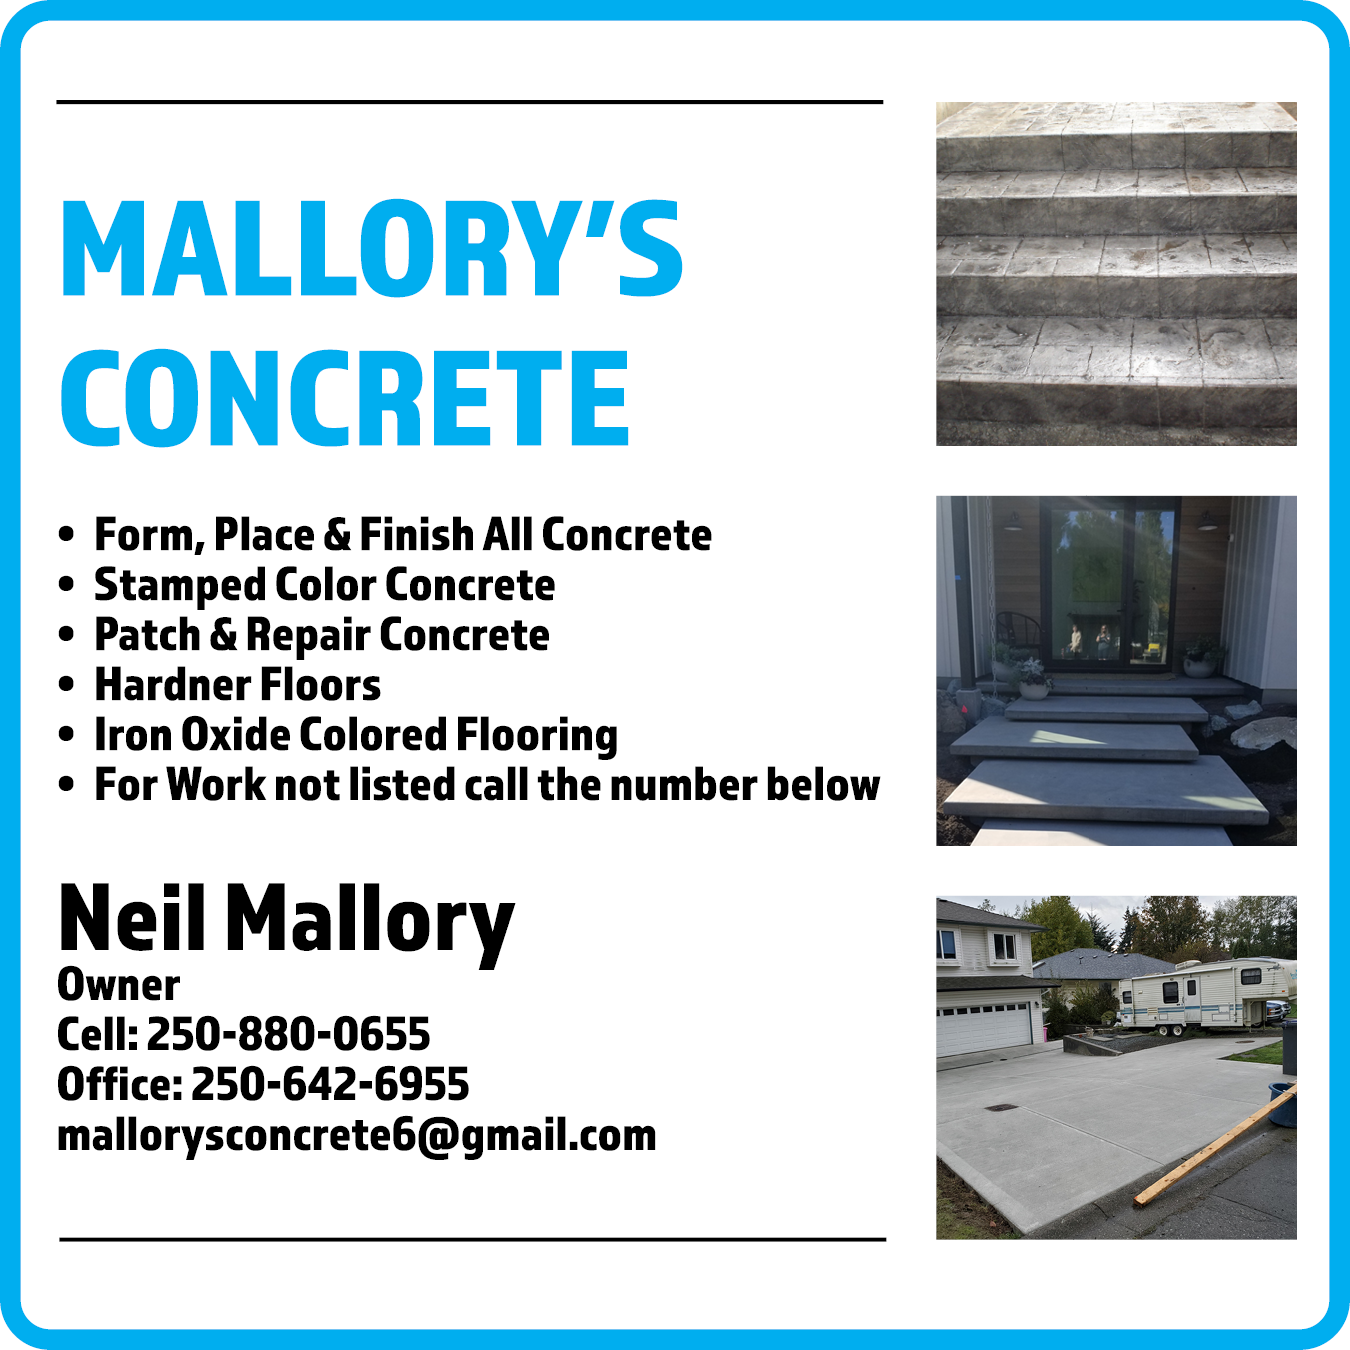 Mallory's Concrete